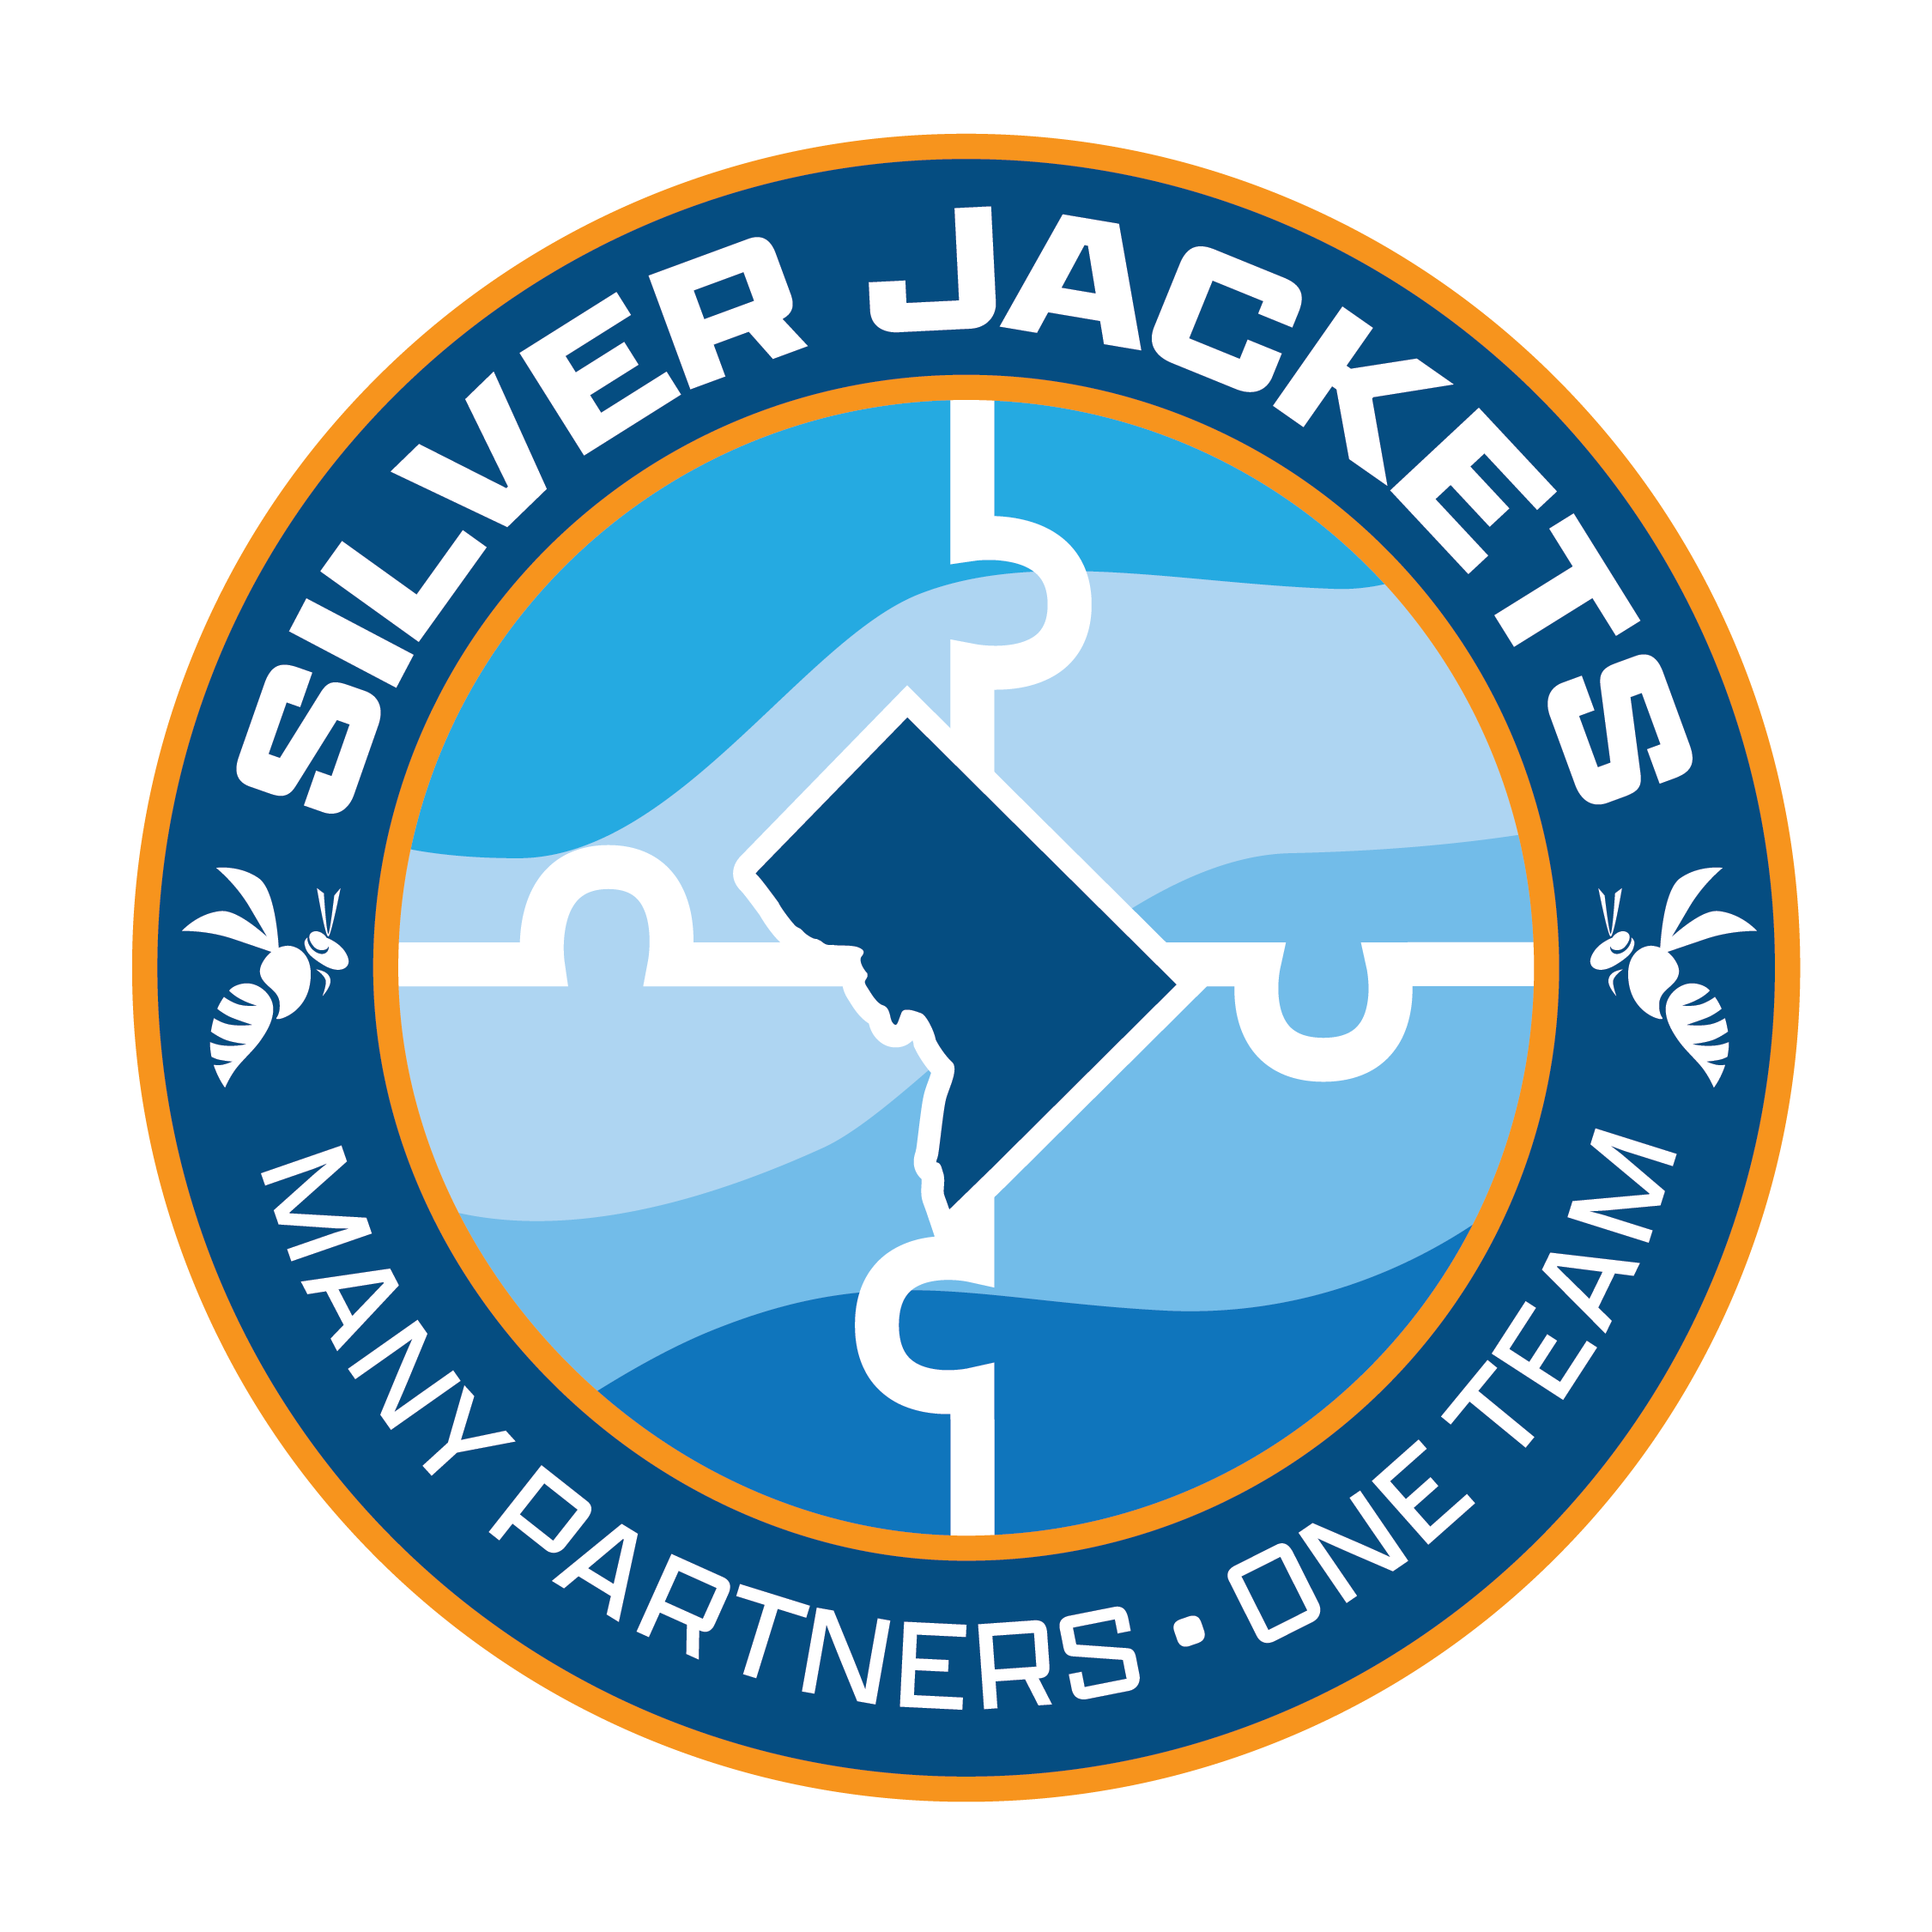 Washington, D.C. Silver Jackets logo